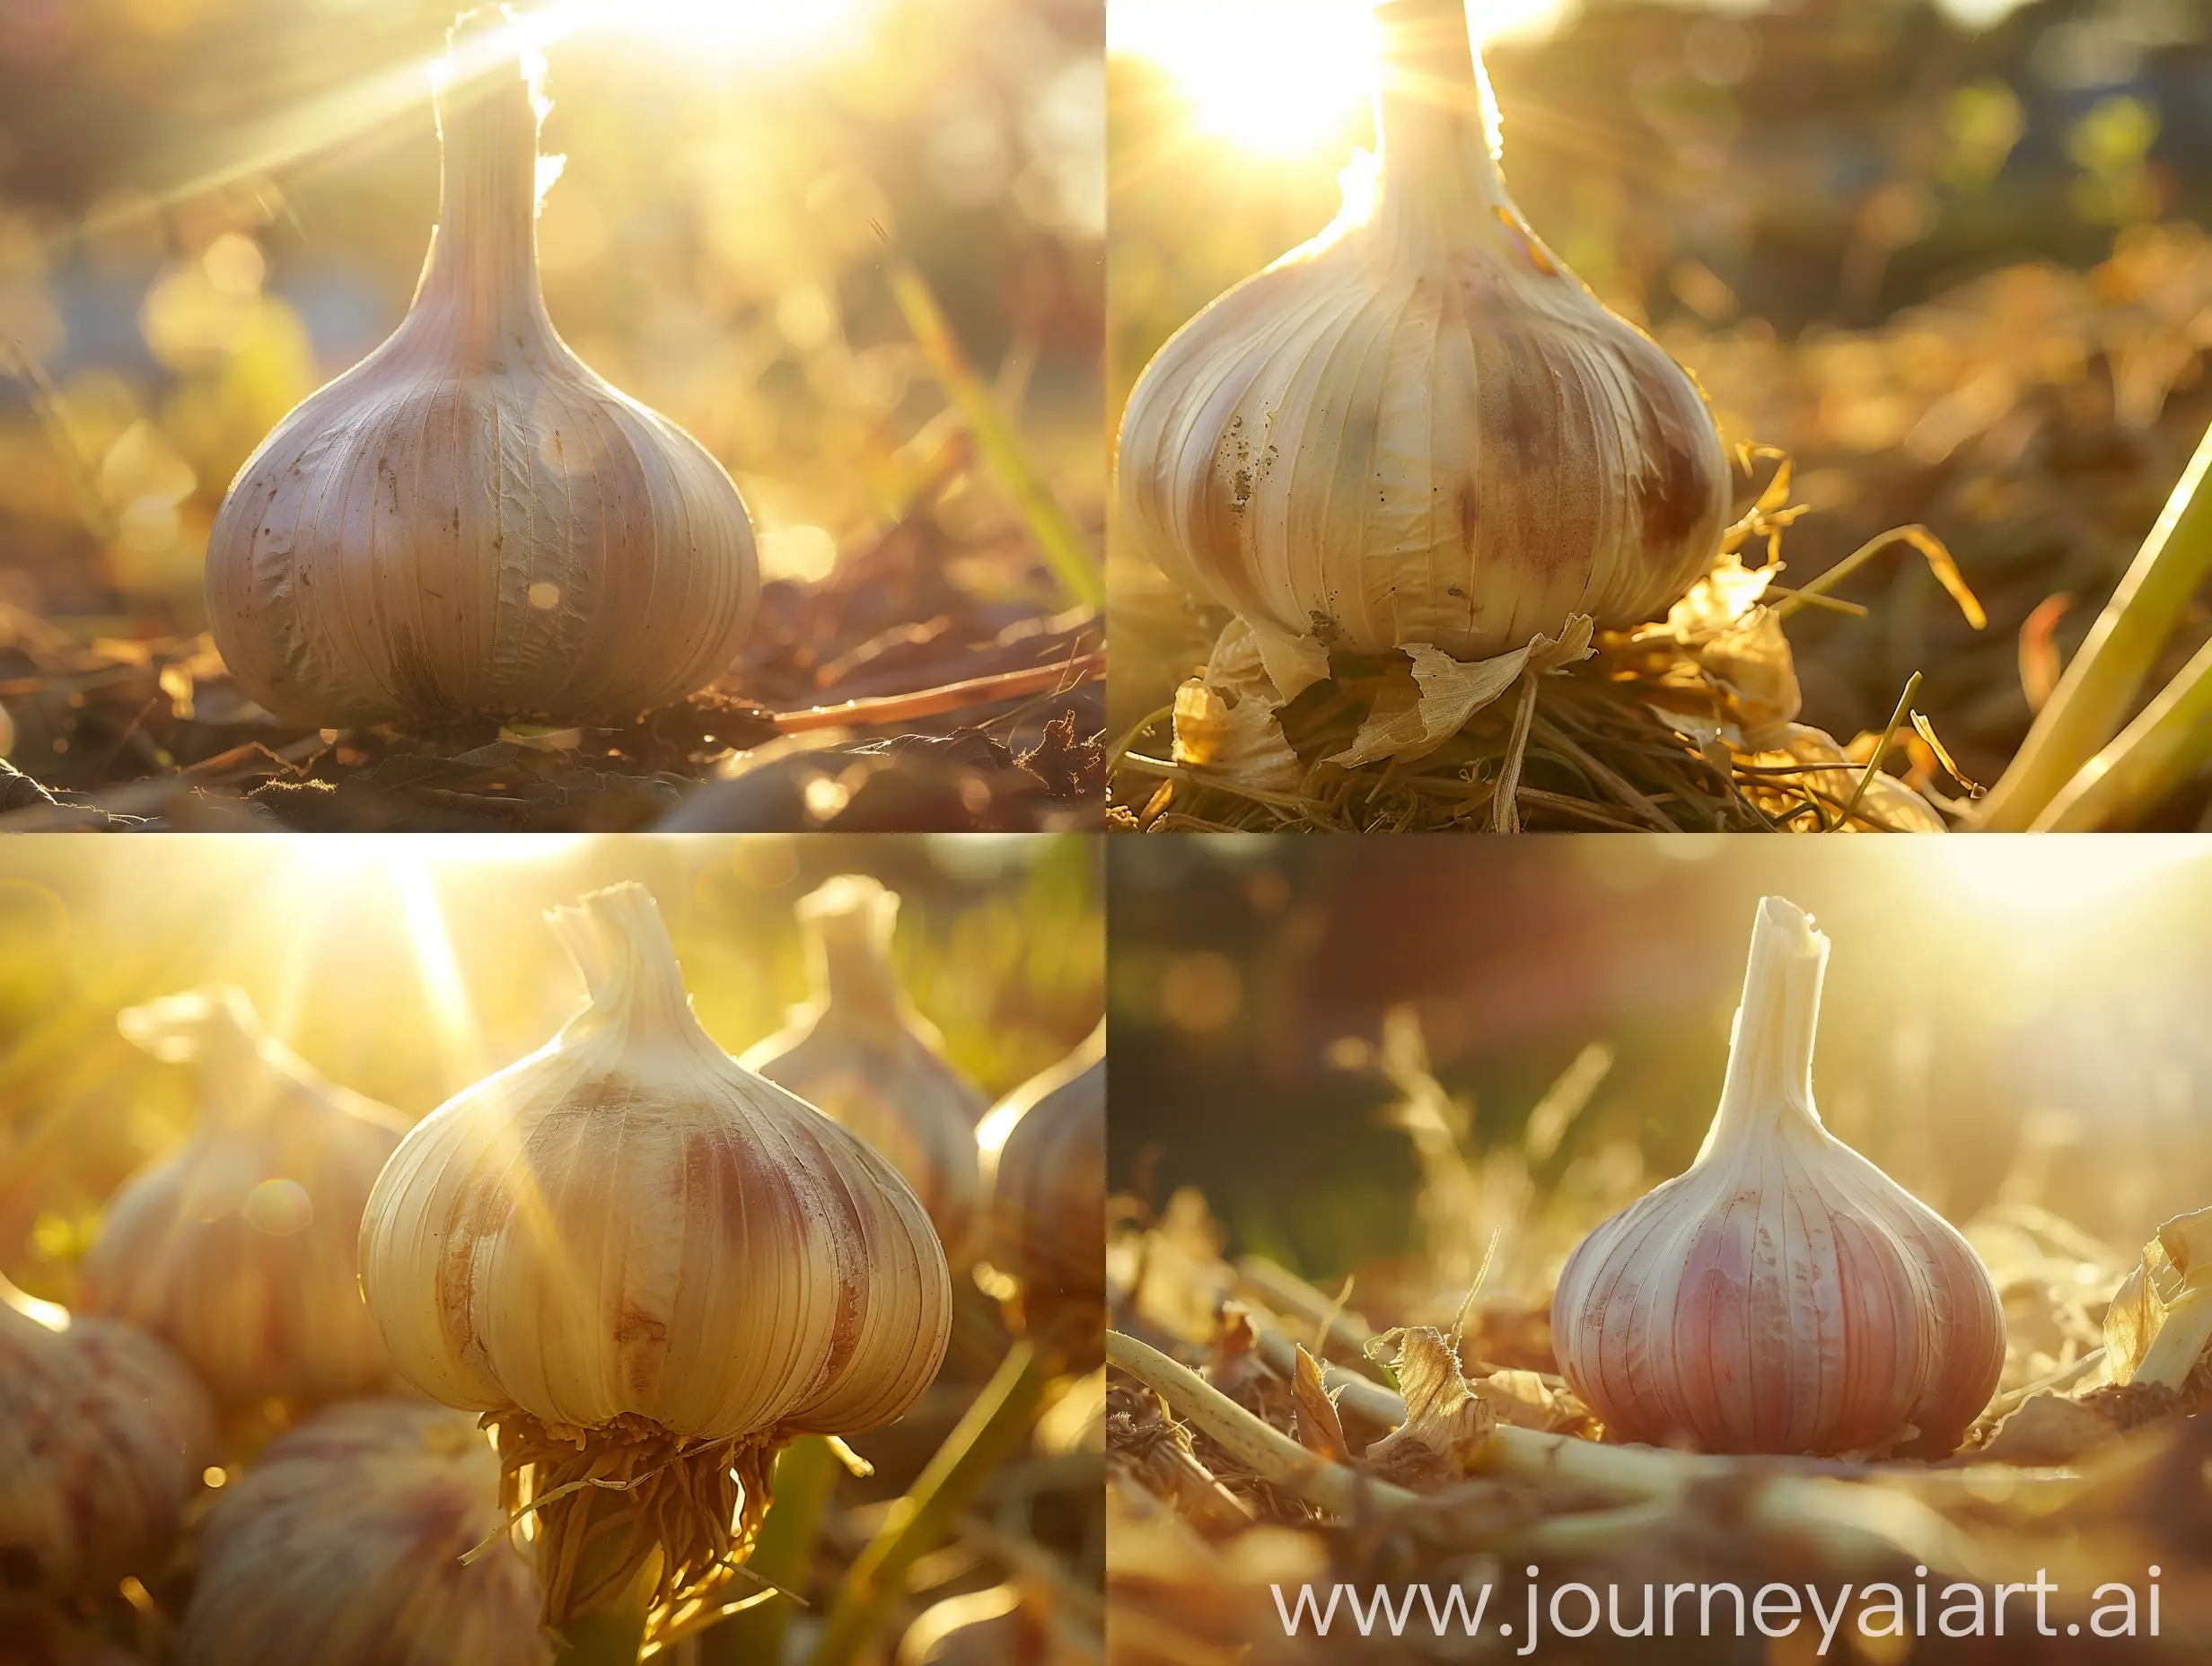 Golden-Glow-Highlighting-Intricate-Details-of-Garlic-Shilla